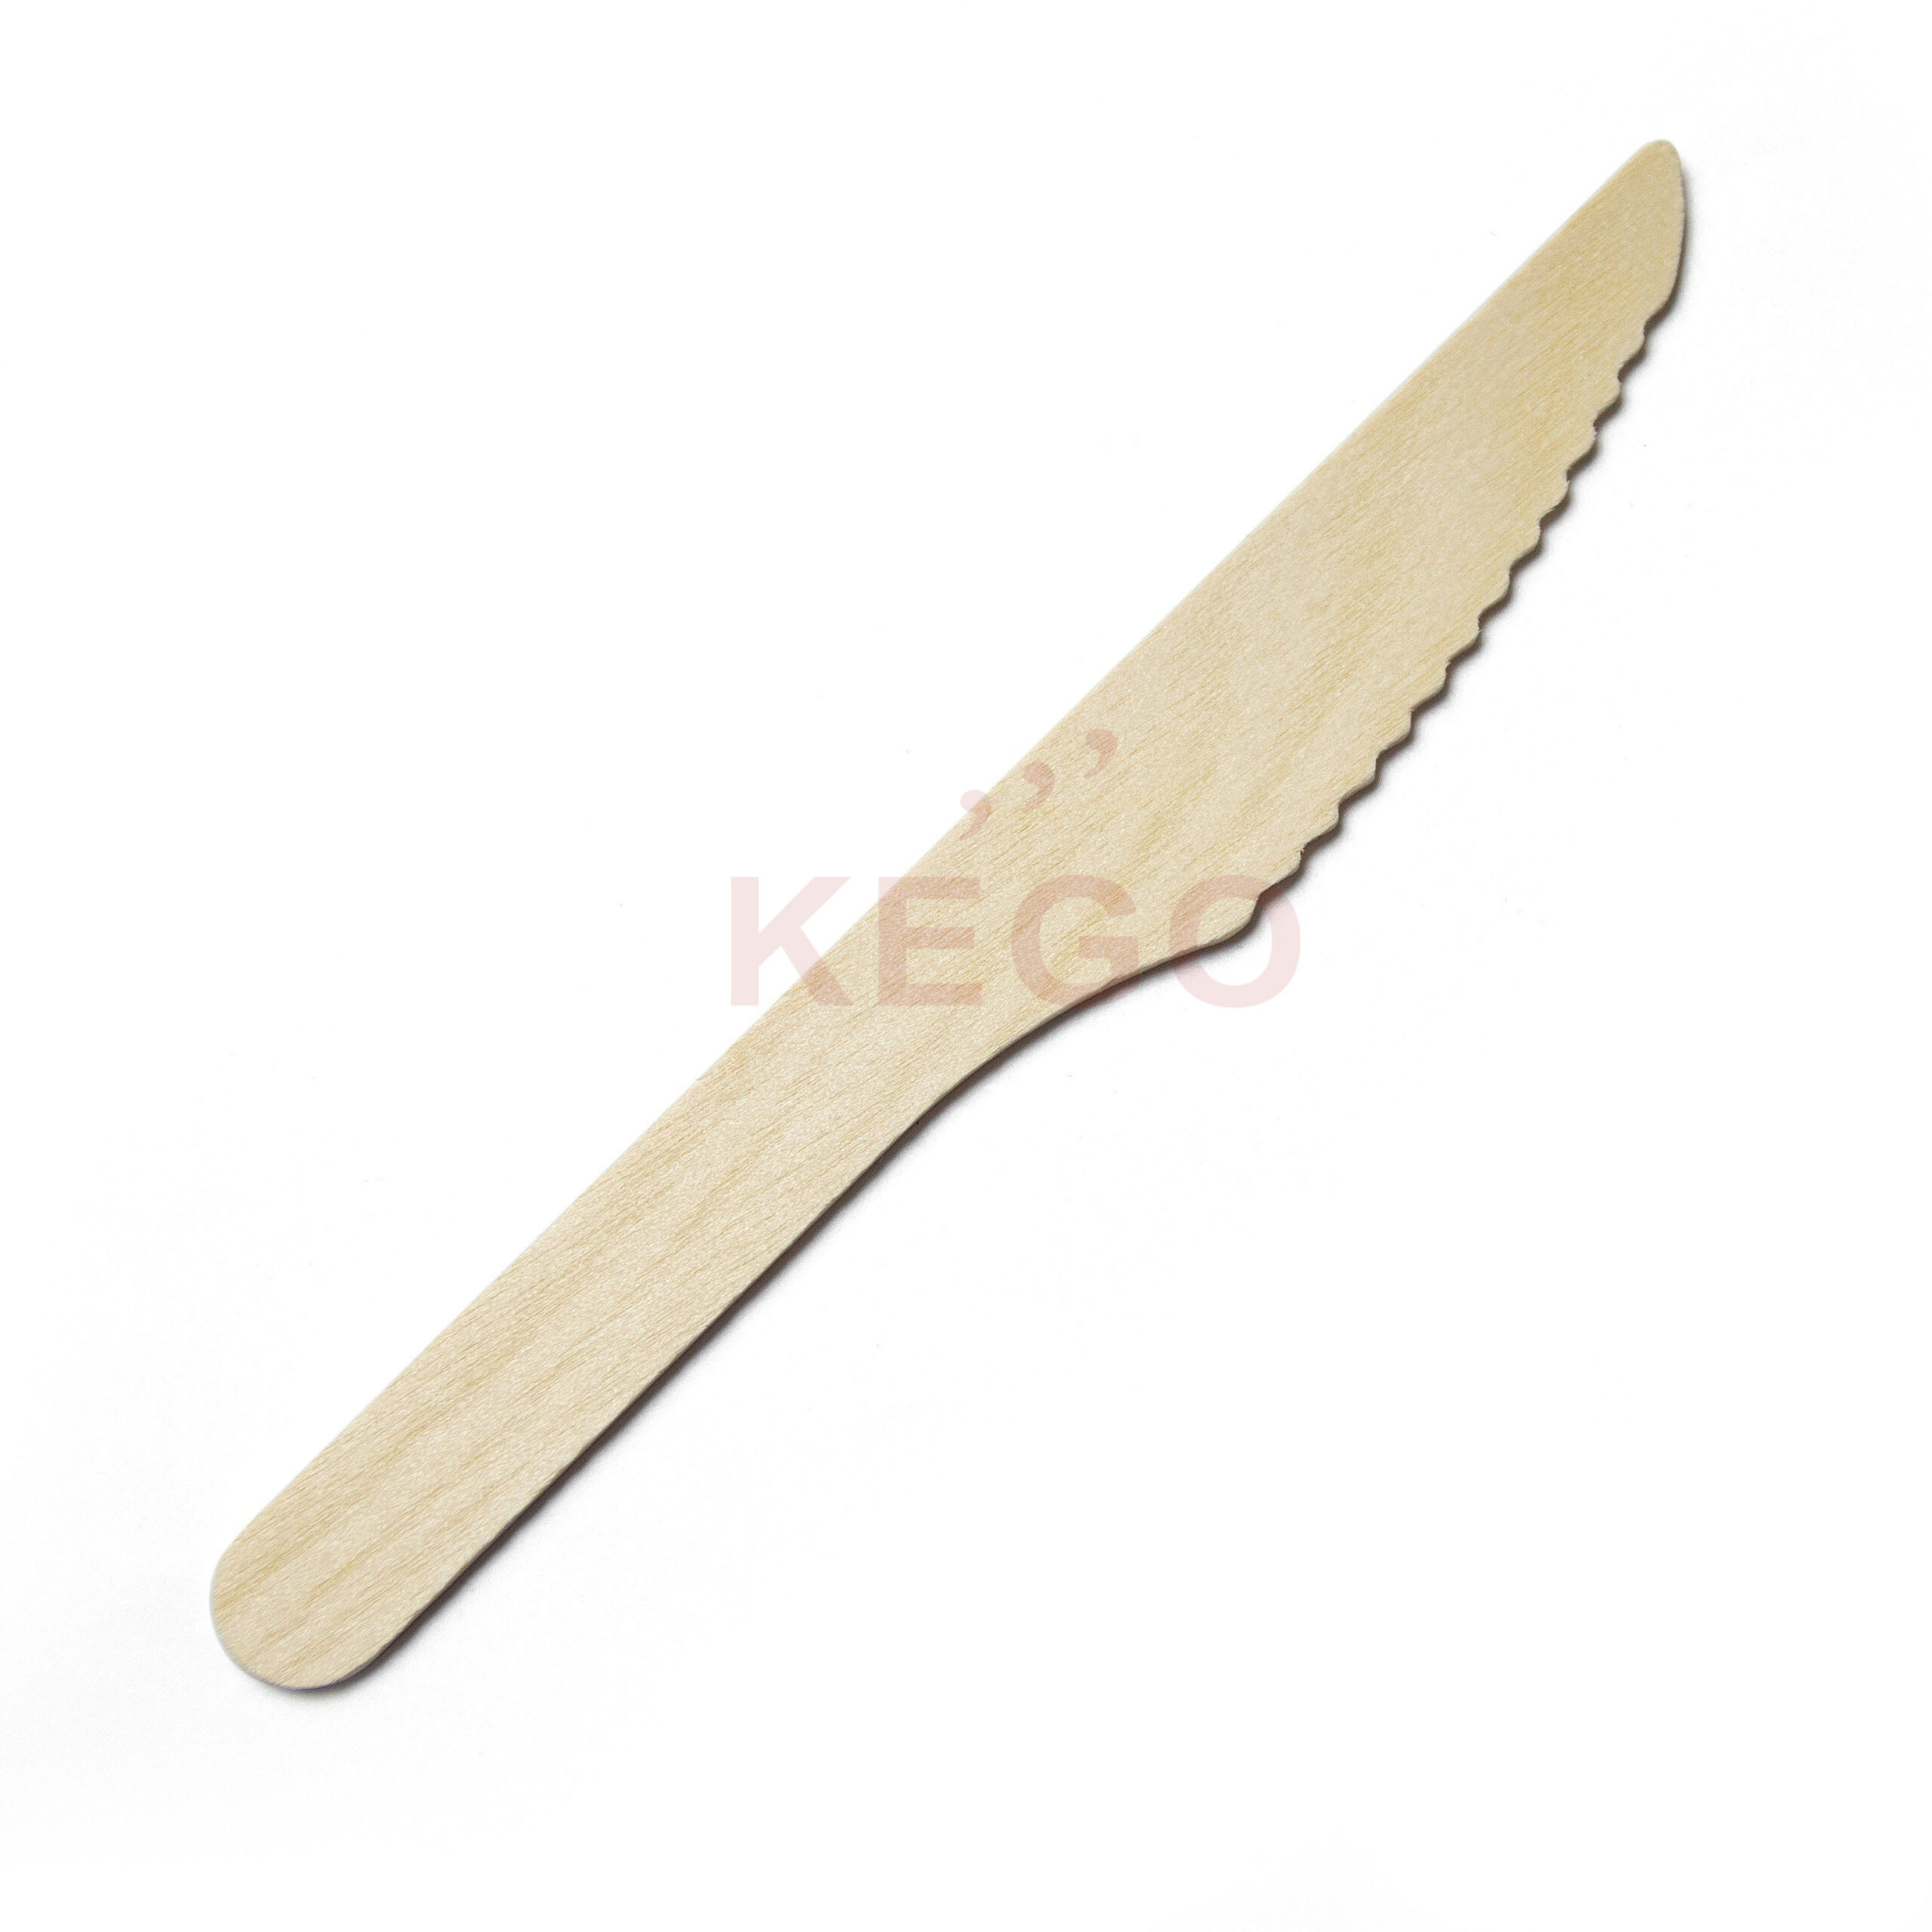 https://kego.vn/wp-content/uploads/2015/09/Disposable-Wooden-Knife-165-2-scaled.jpg